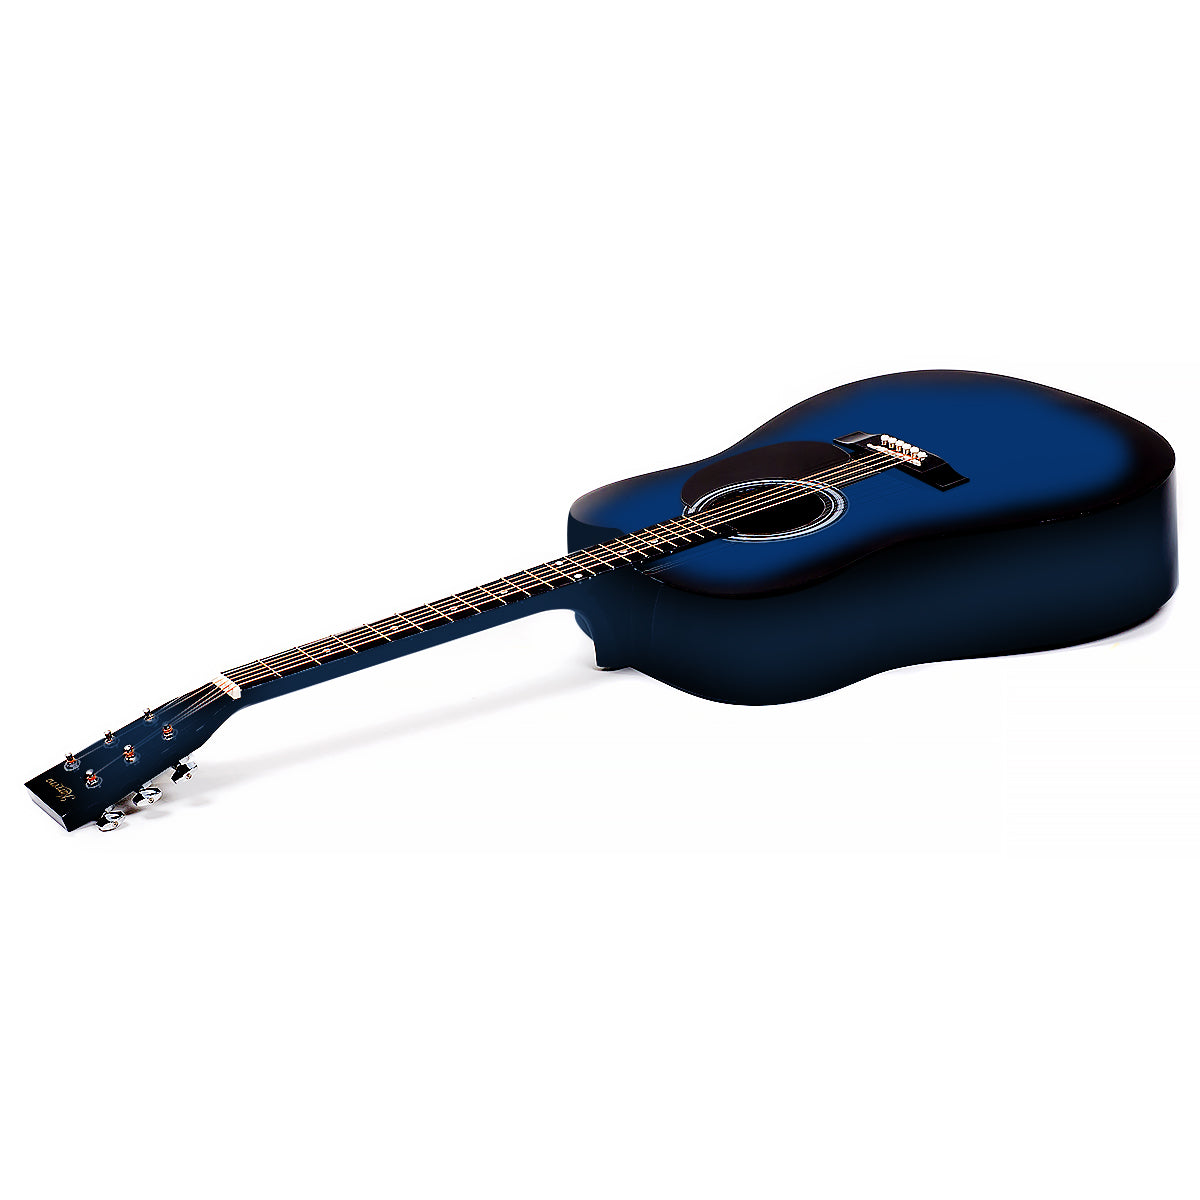 Karrera 38in Cutaway Acoustic Guitar with guitar bag - Blue Burst - SILBERSHELL